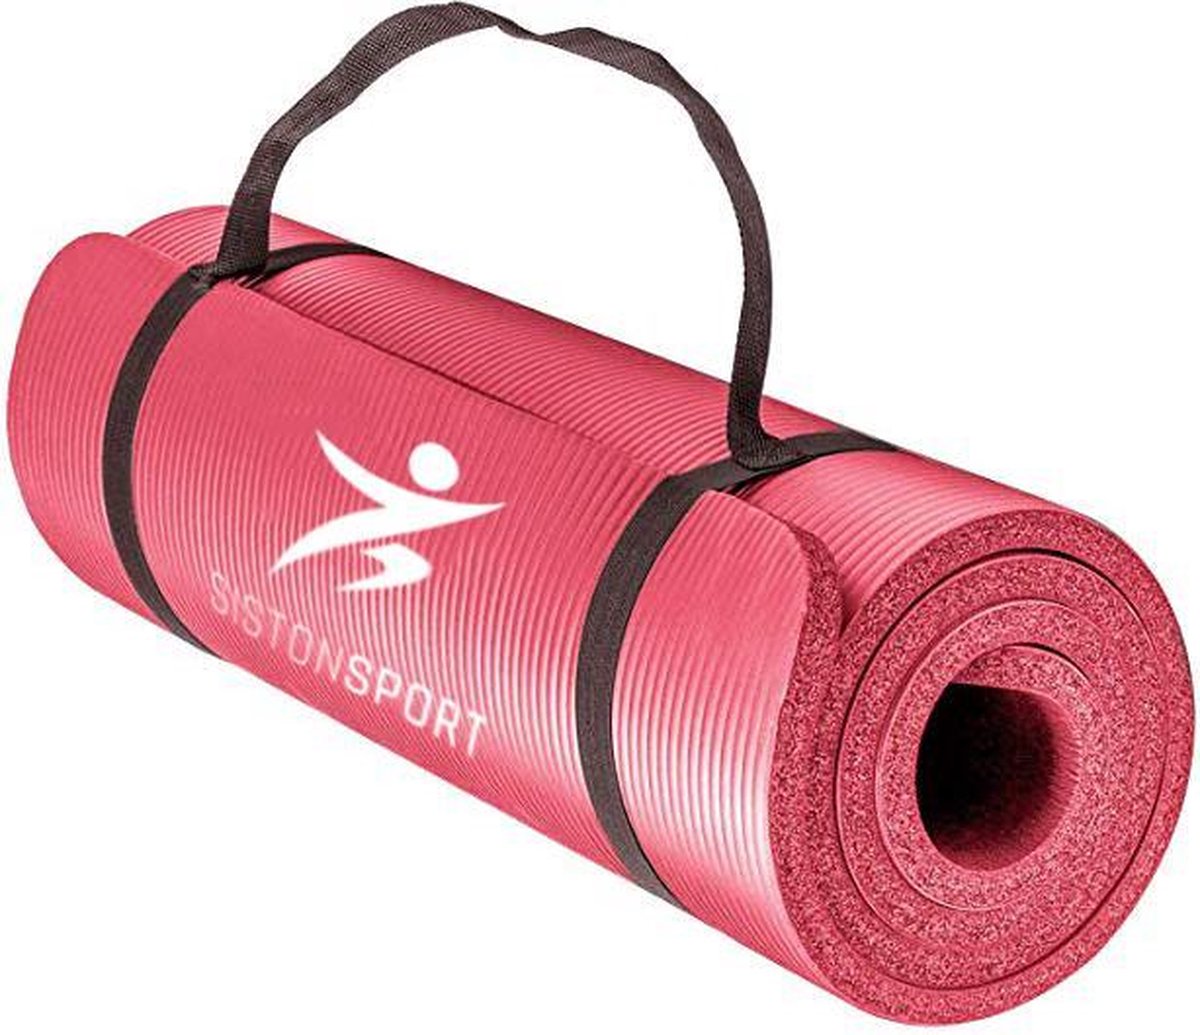 Siston Sport Fitnessmat – 183 cm x 61 cm x 1.5 cm – Roze – Inclusief draagtas en extra draagriem – Hoogwaardige NBR trainingsmat - ANTI Slip mat - 100% Huidvriendelijk & Duurzaam